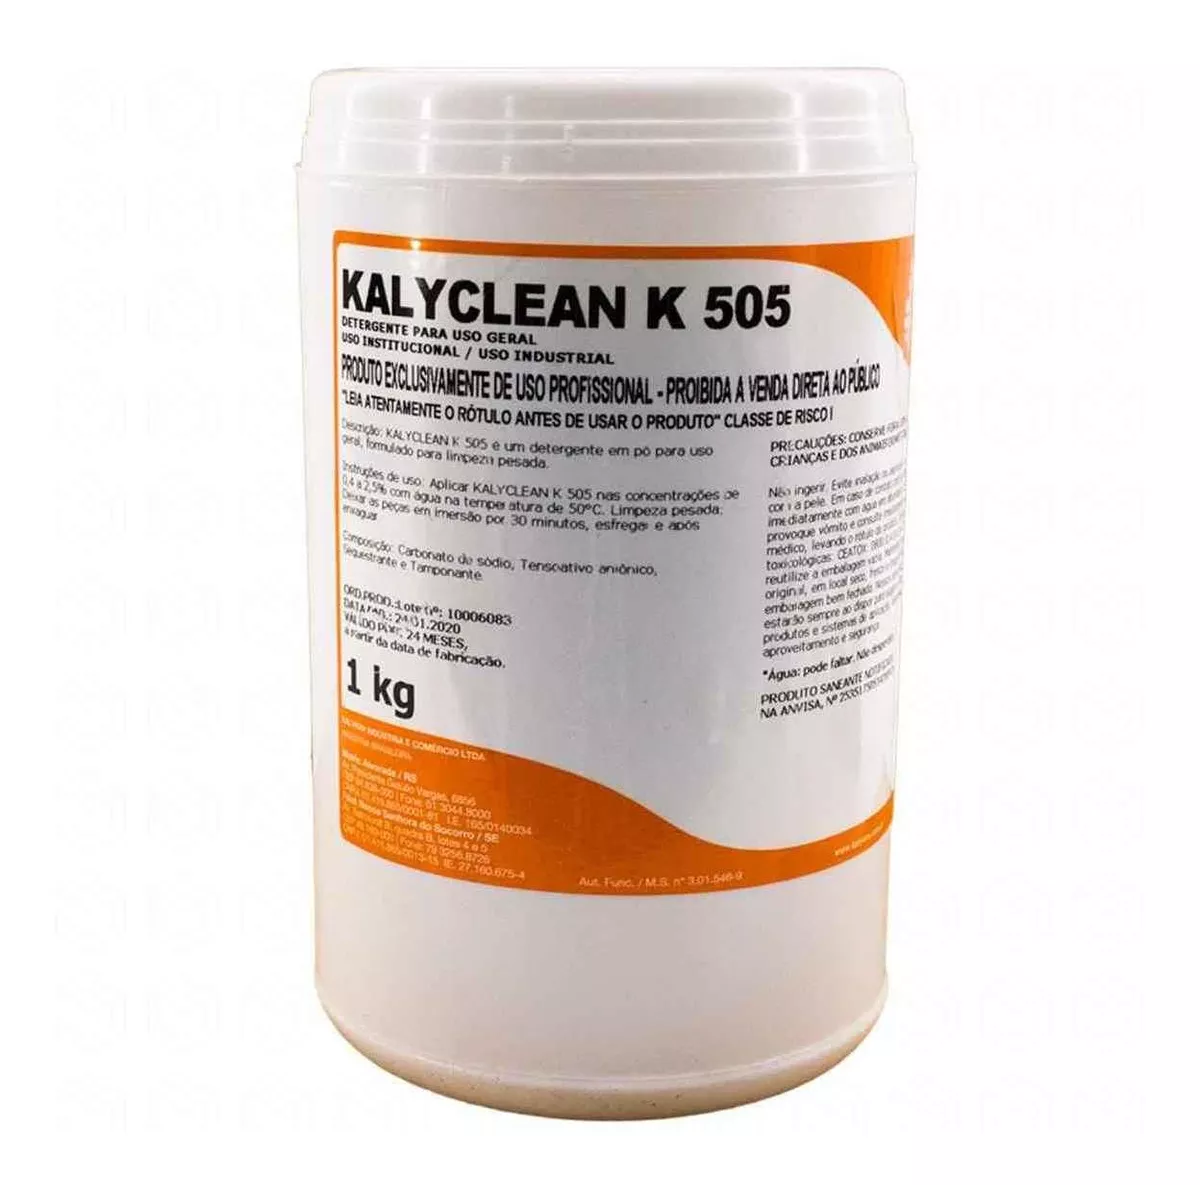 Kalyclean K505 01kg - Detergente Neutro Sanitização Chopeira